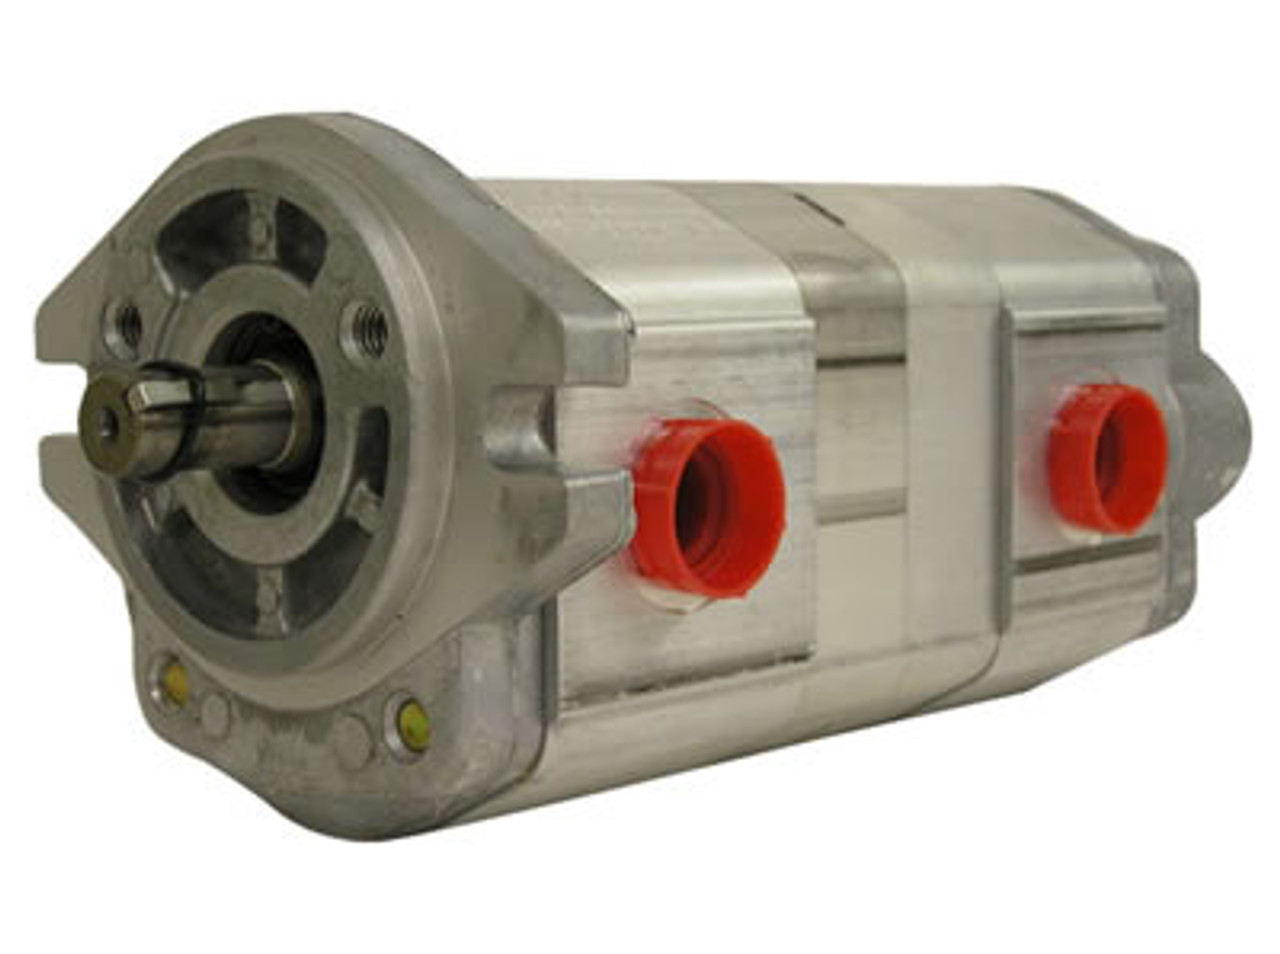 2DG1BU1605L Honor Pumps USA Tandem hydraulic gear pump 7.42 GPM/2.27 GPM @ 1800 RPM  Honor Pumps USA